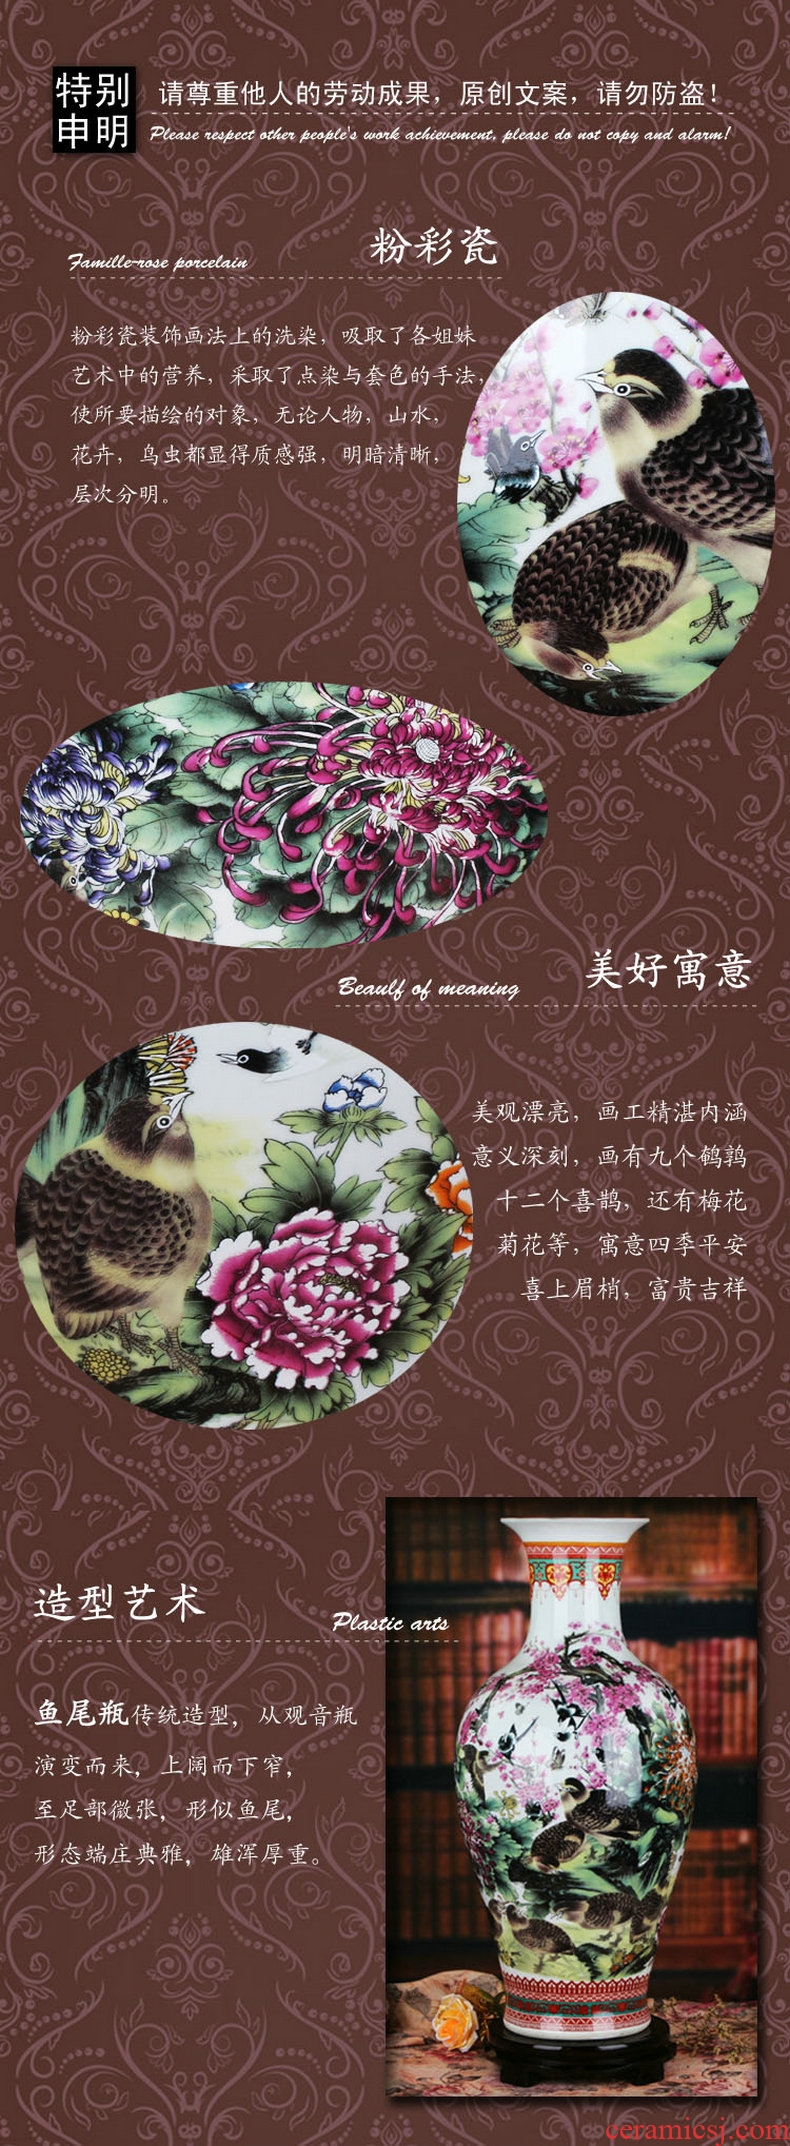 Chinese jingdezhen ceramics powder enamel 9, 12 fish large vases, Chinese crafts decorations